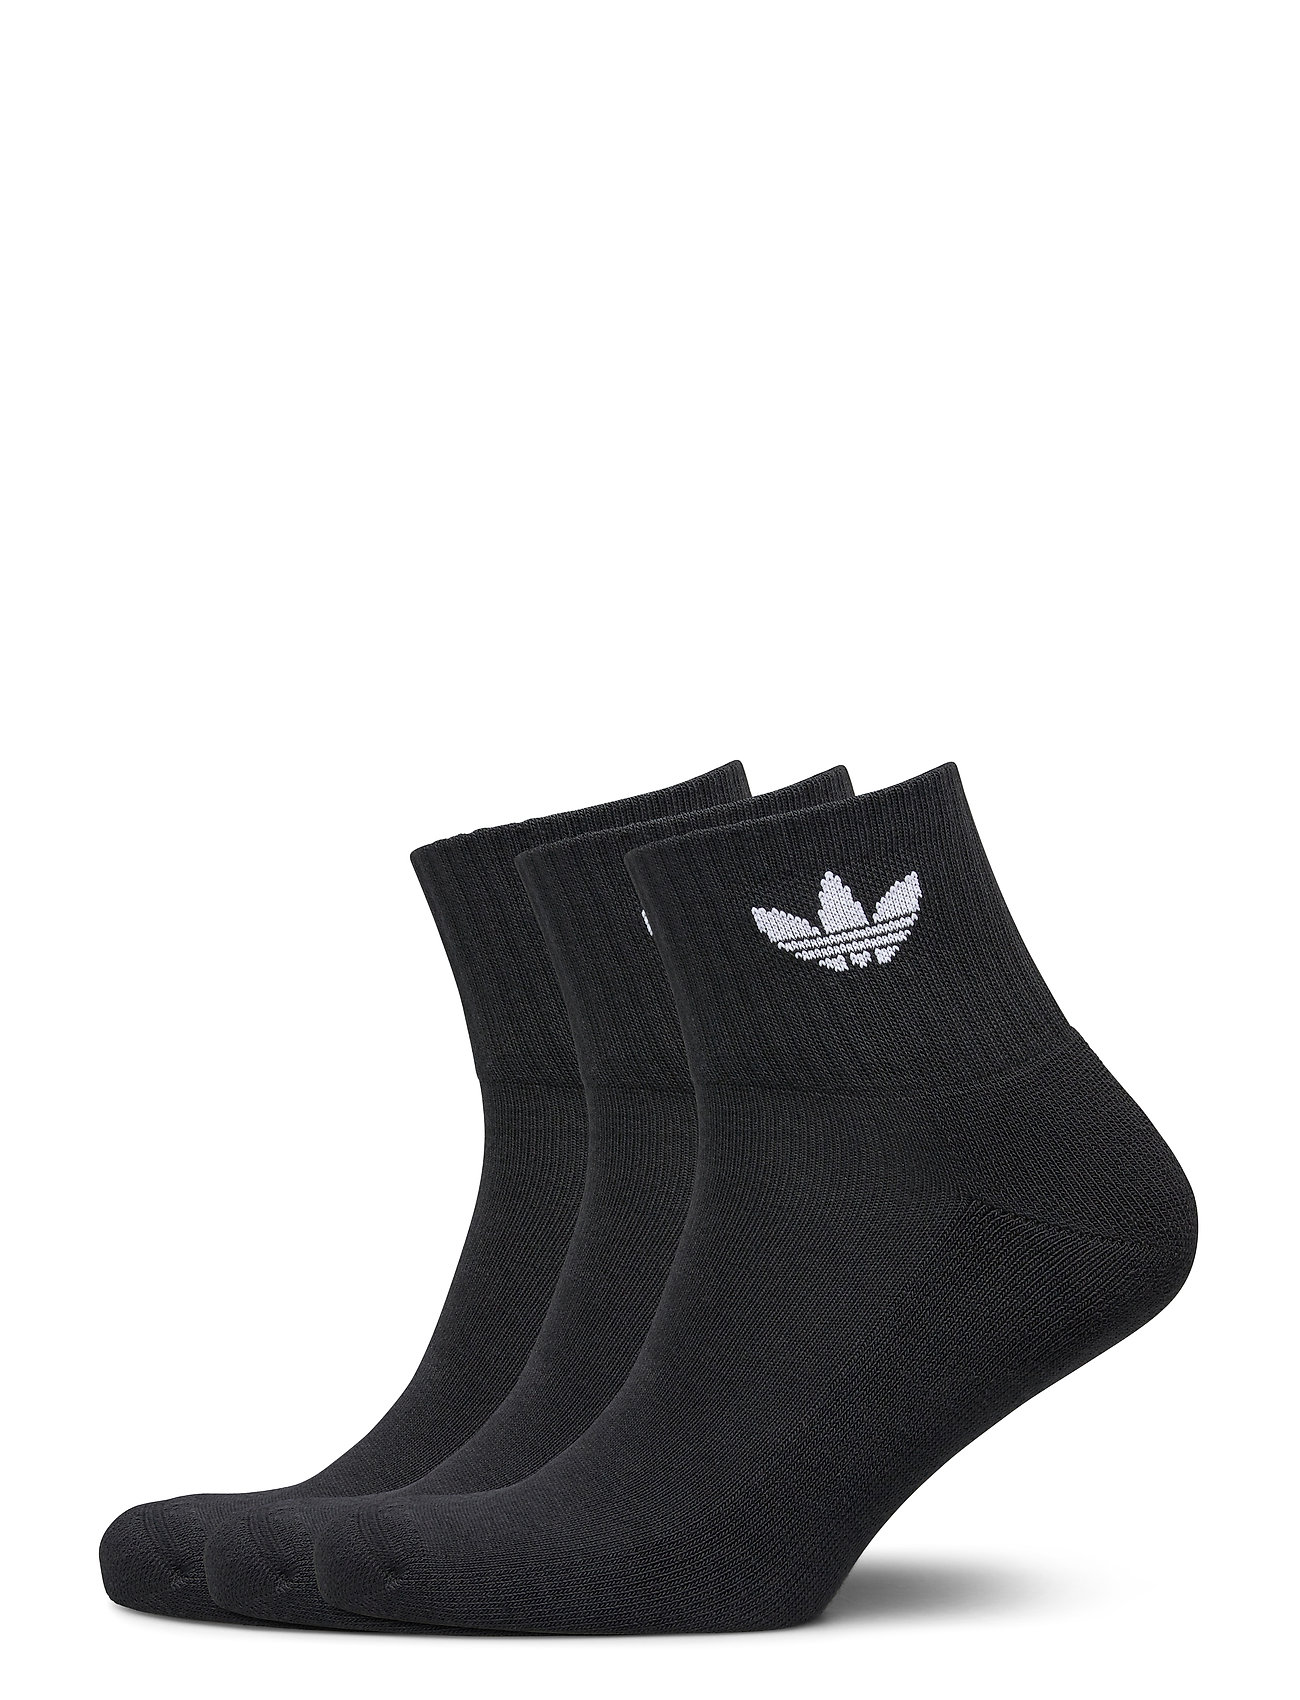 adidas Originals Mid Ankle Sck - Ankle socks - Boozt.com